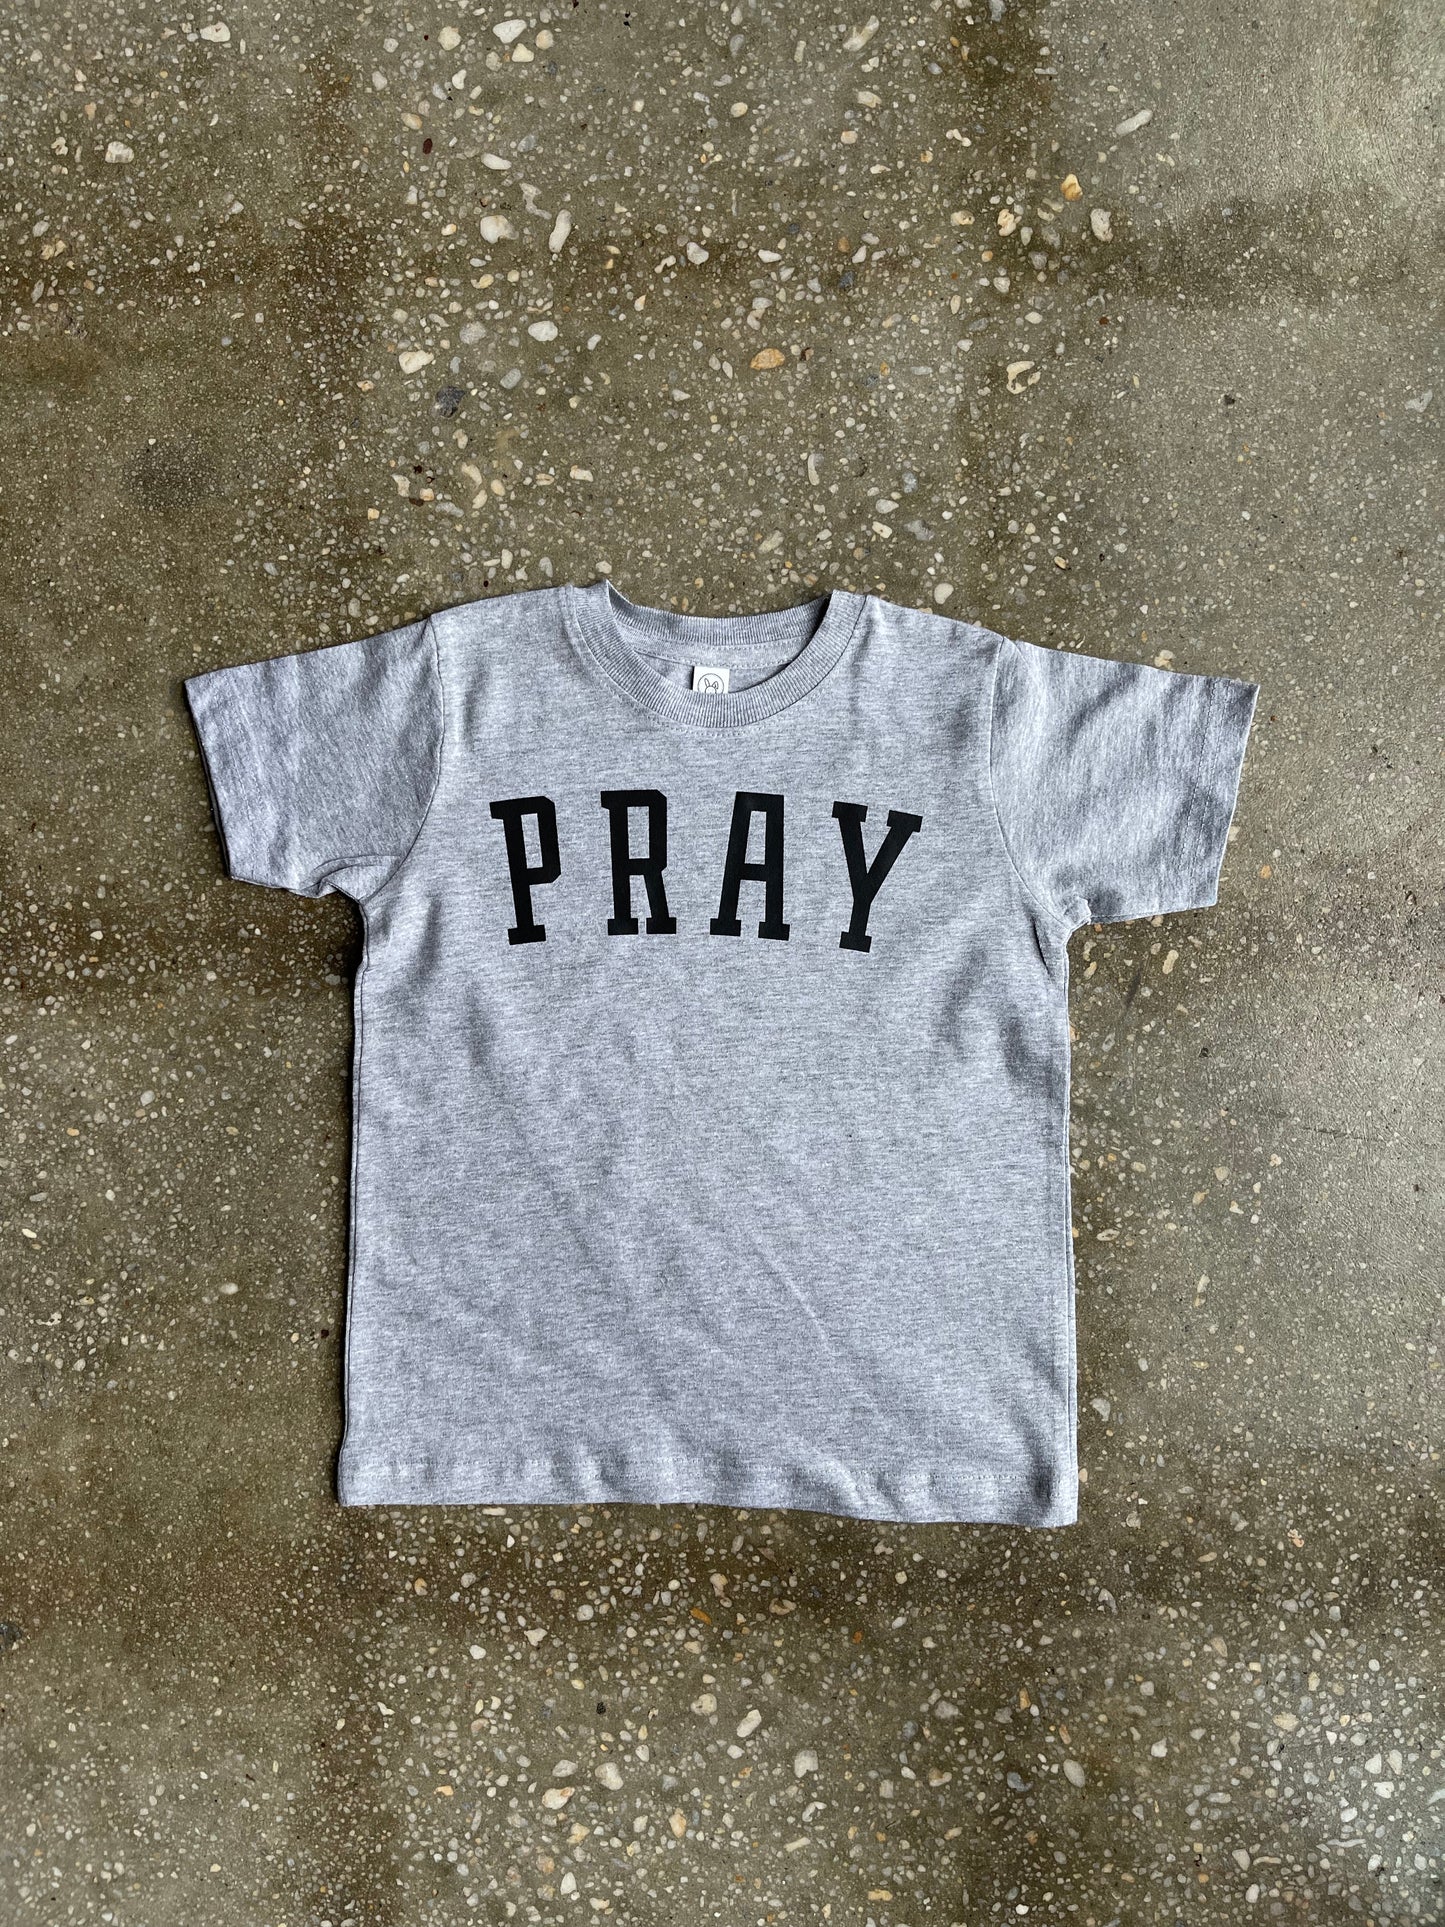 PRAY Kids T-shirt – Beacon Threads